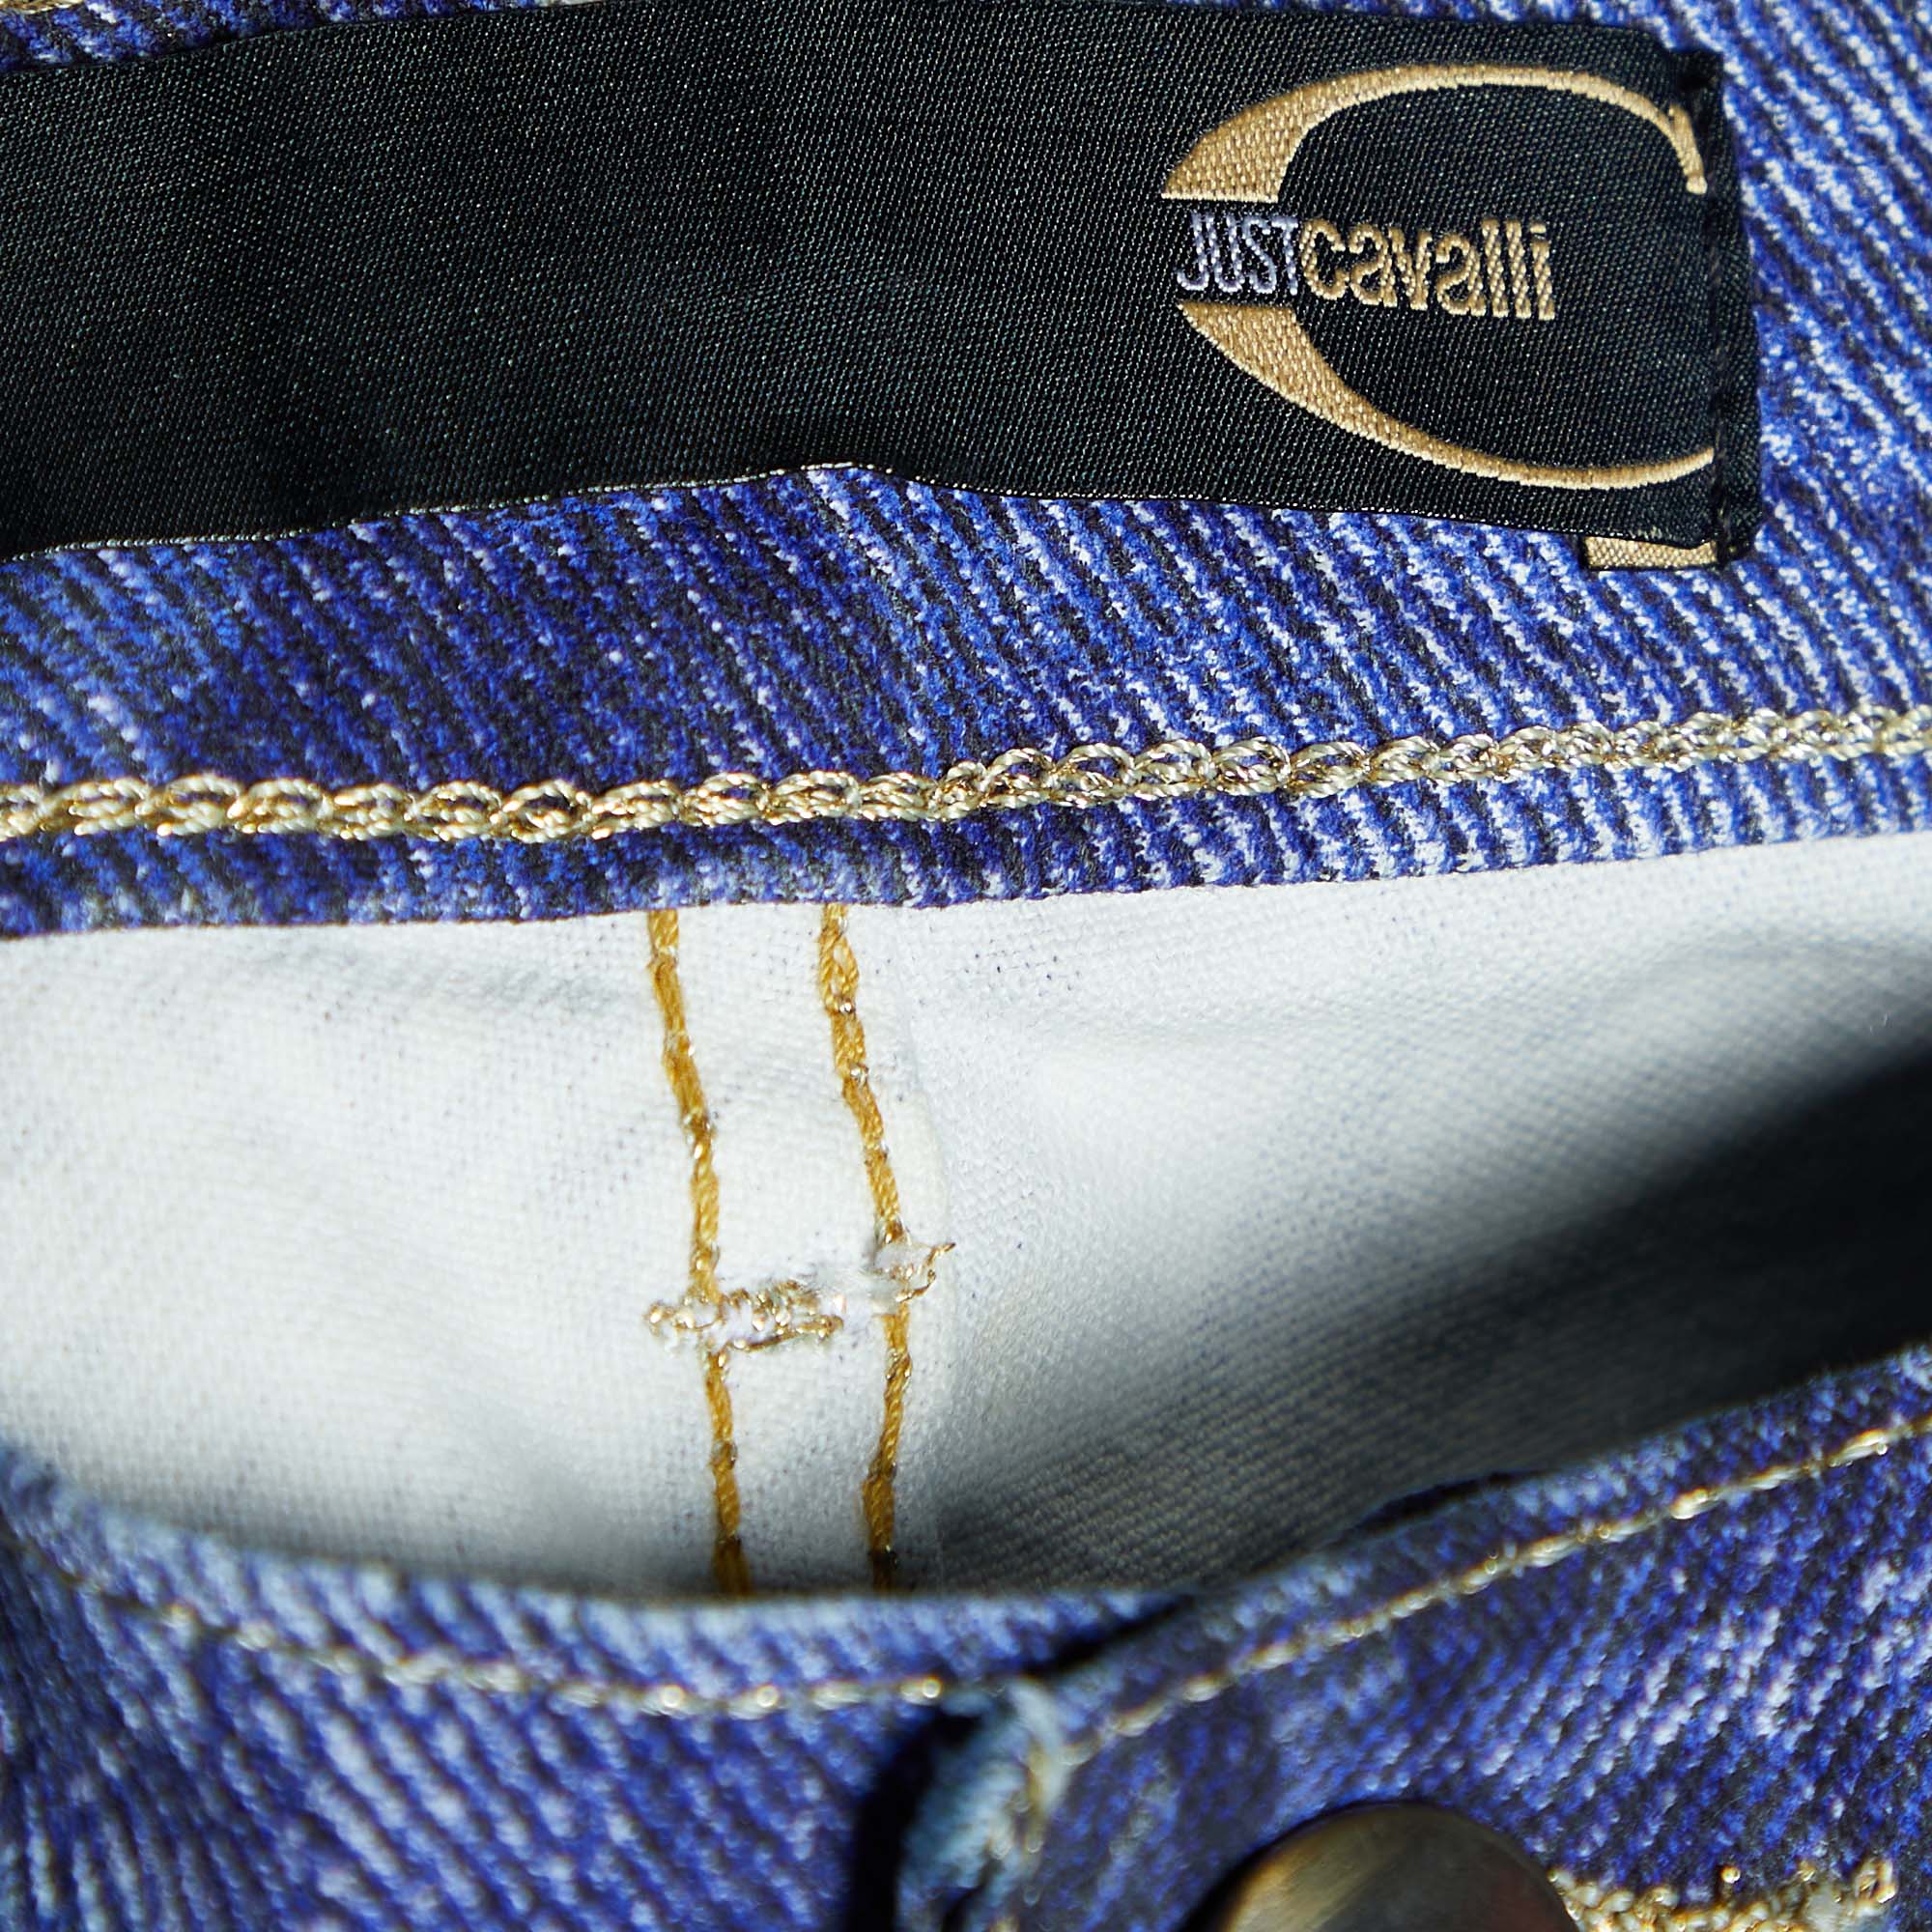 Just Cavalli Blue Ombre Denim Straight Leg Jeans M